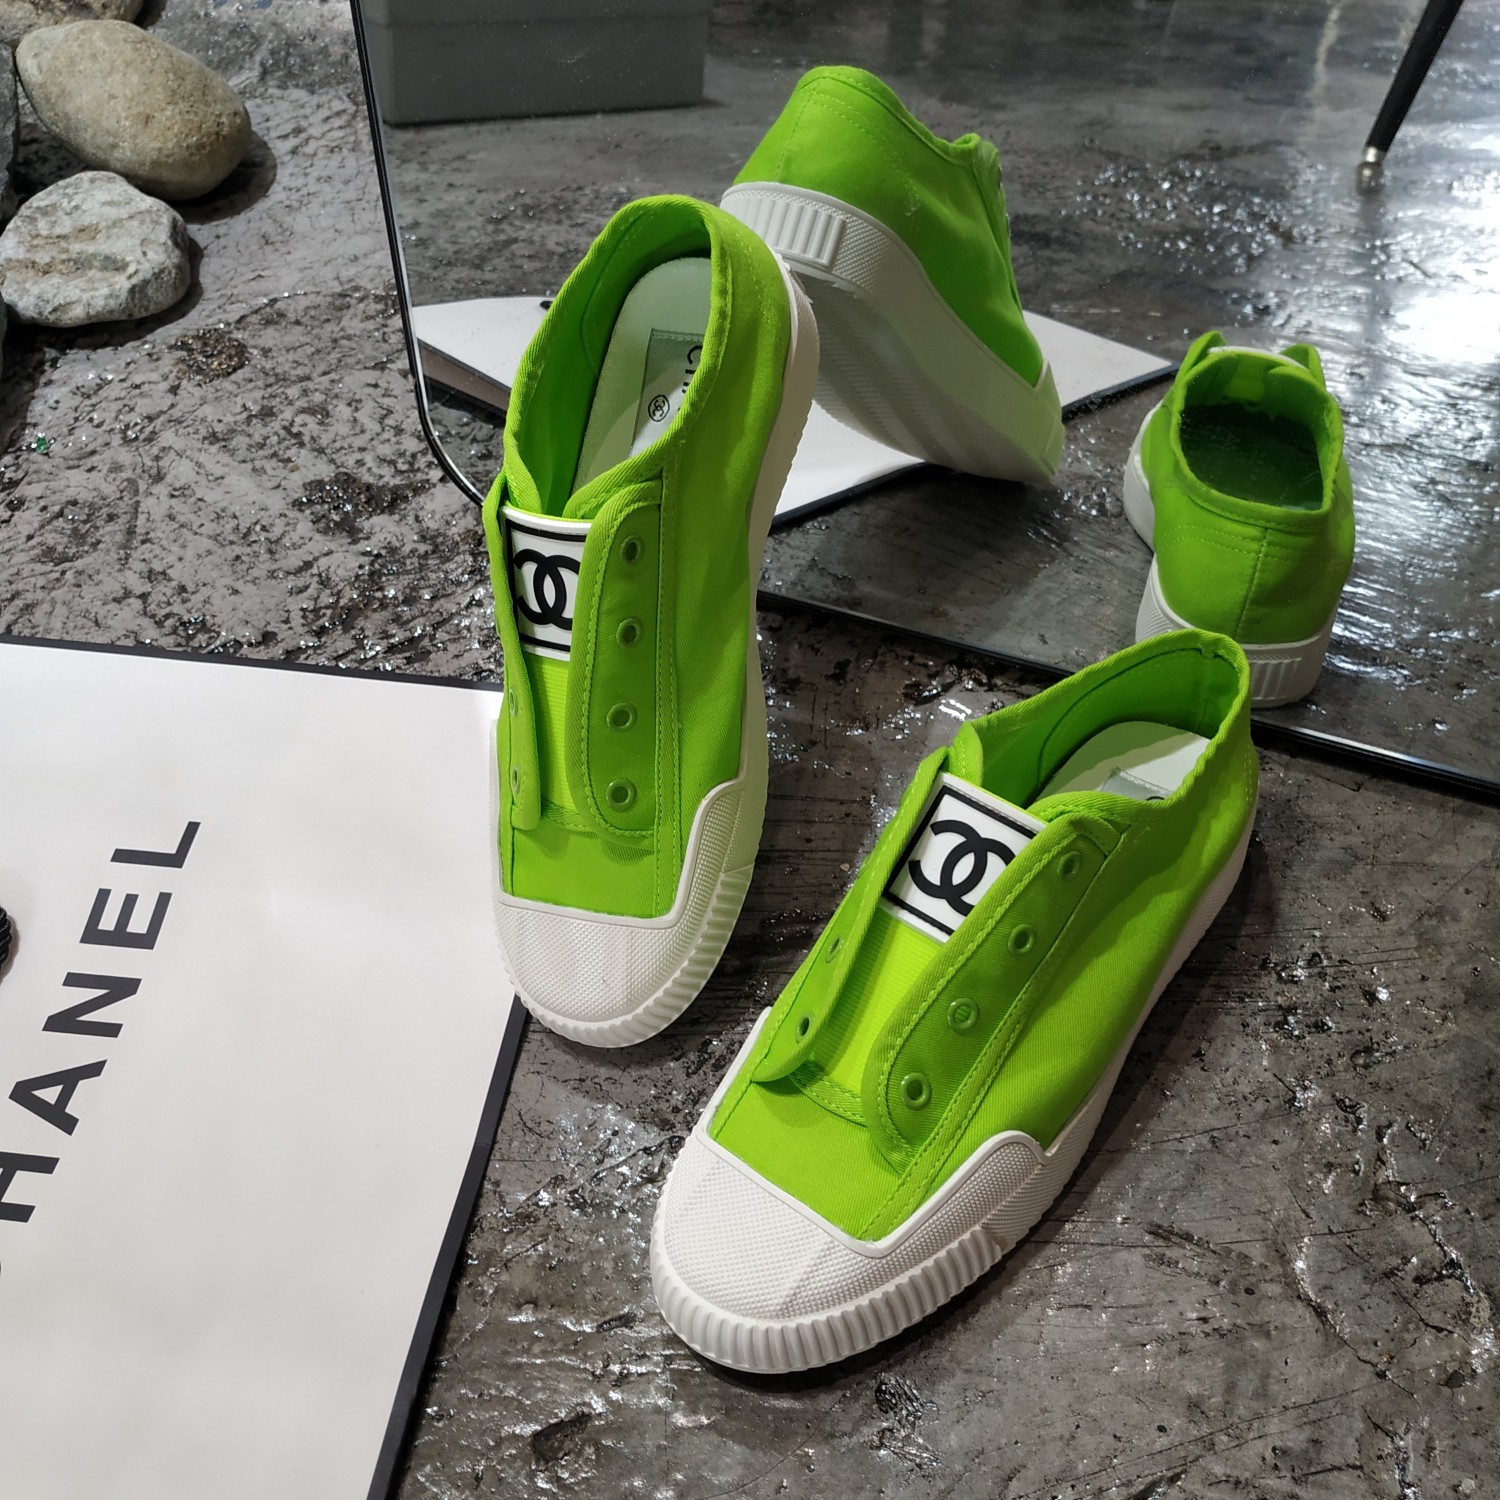 Chanel double C logo white shoes